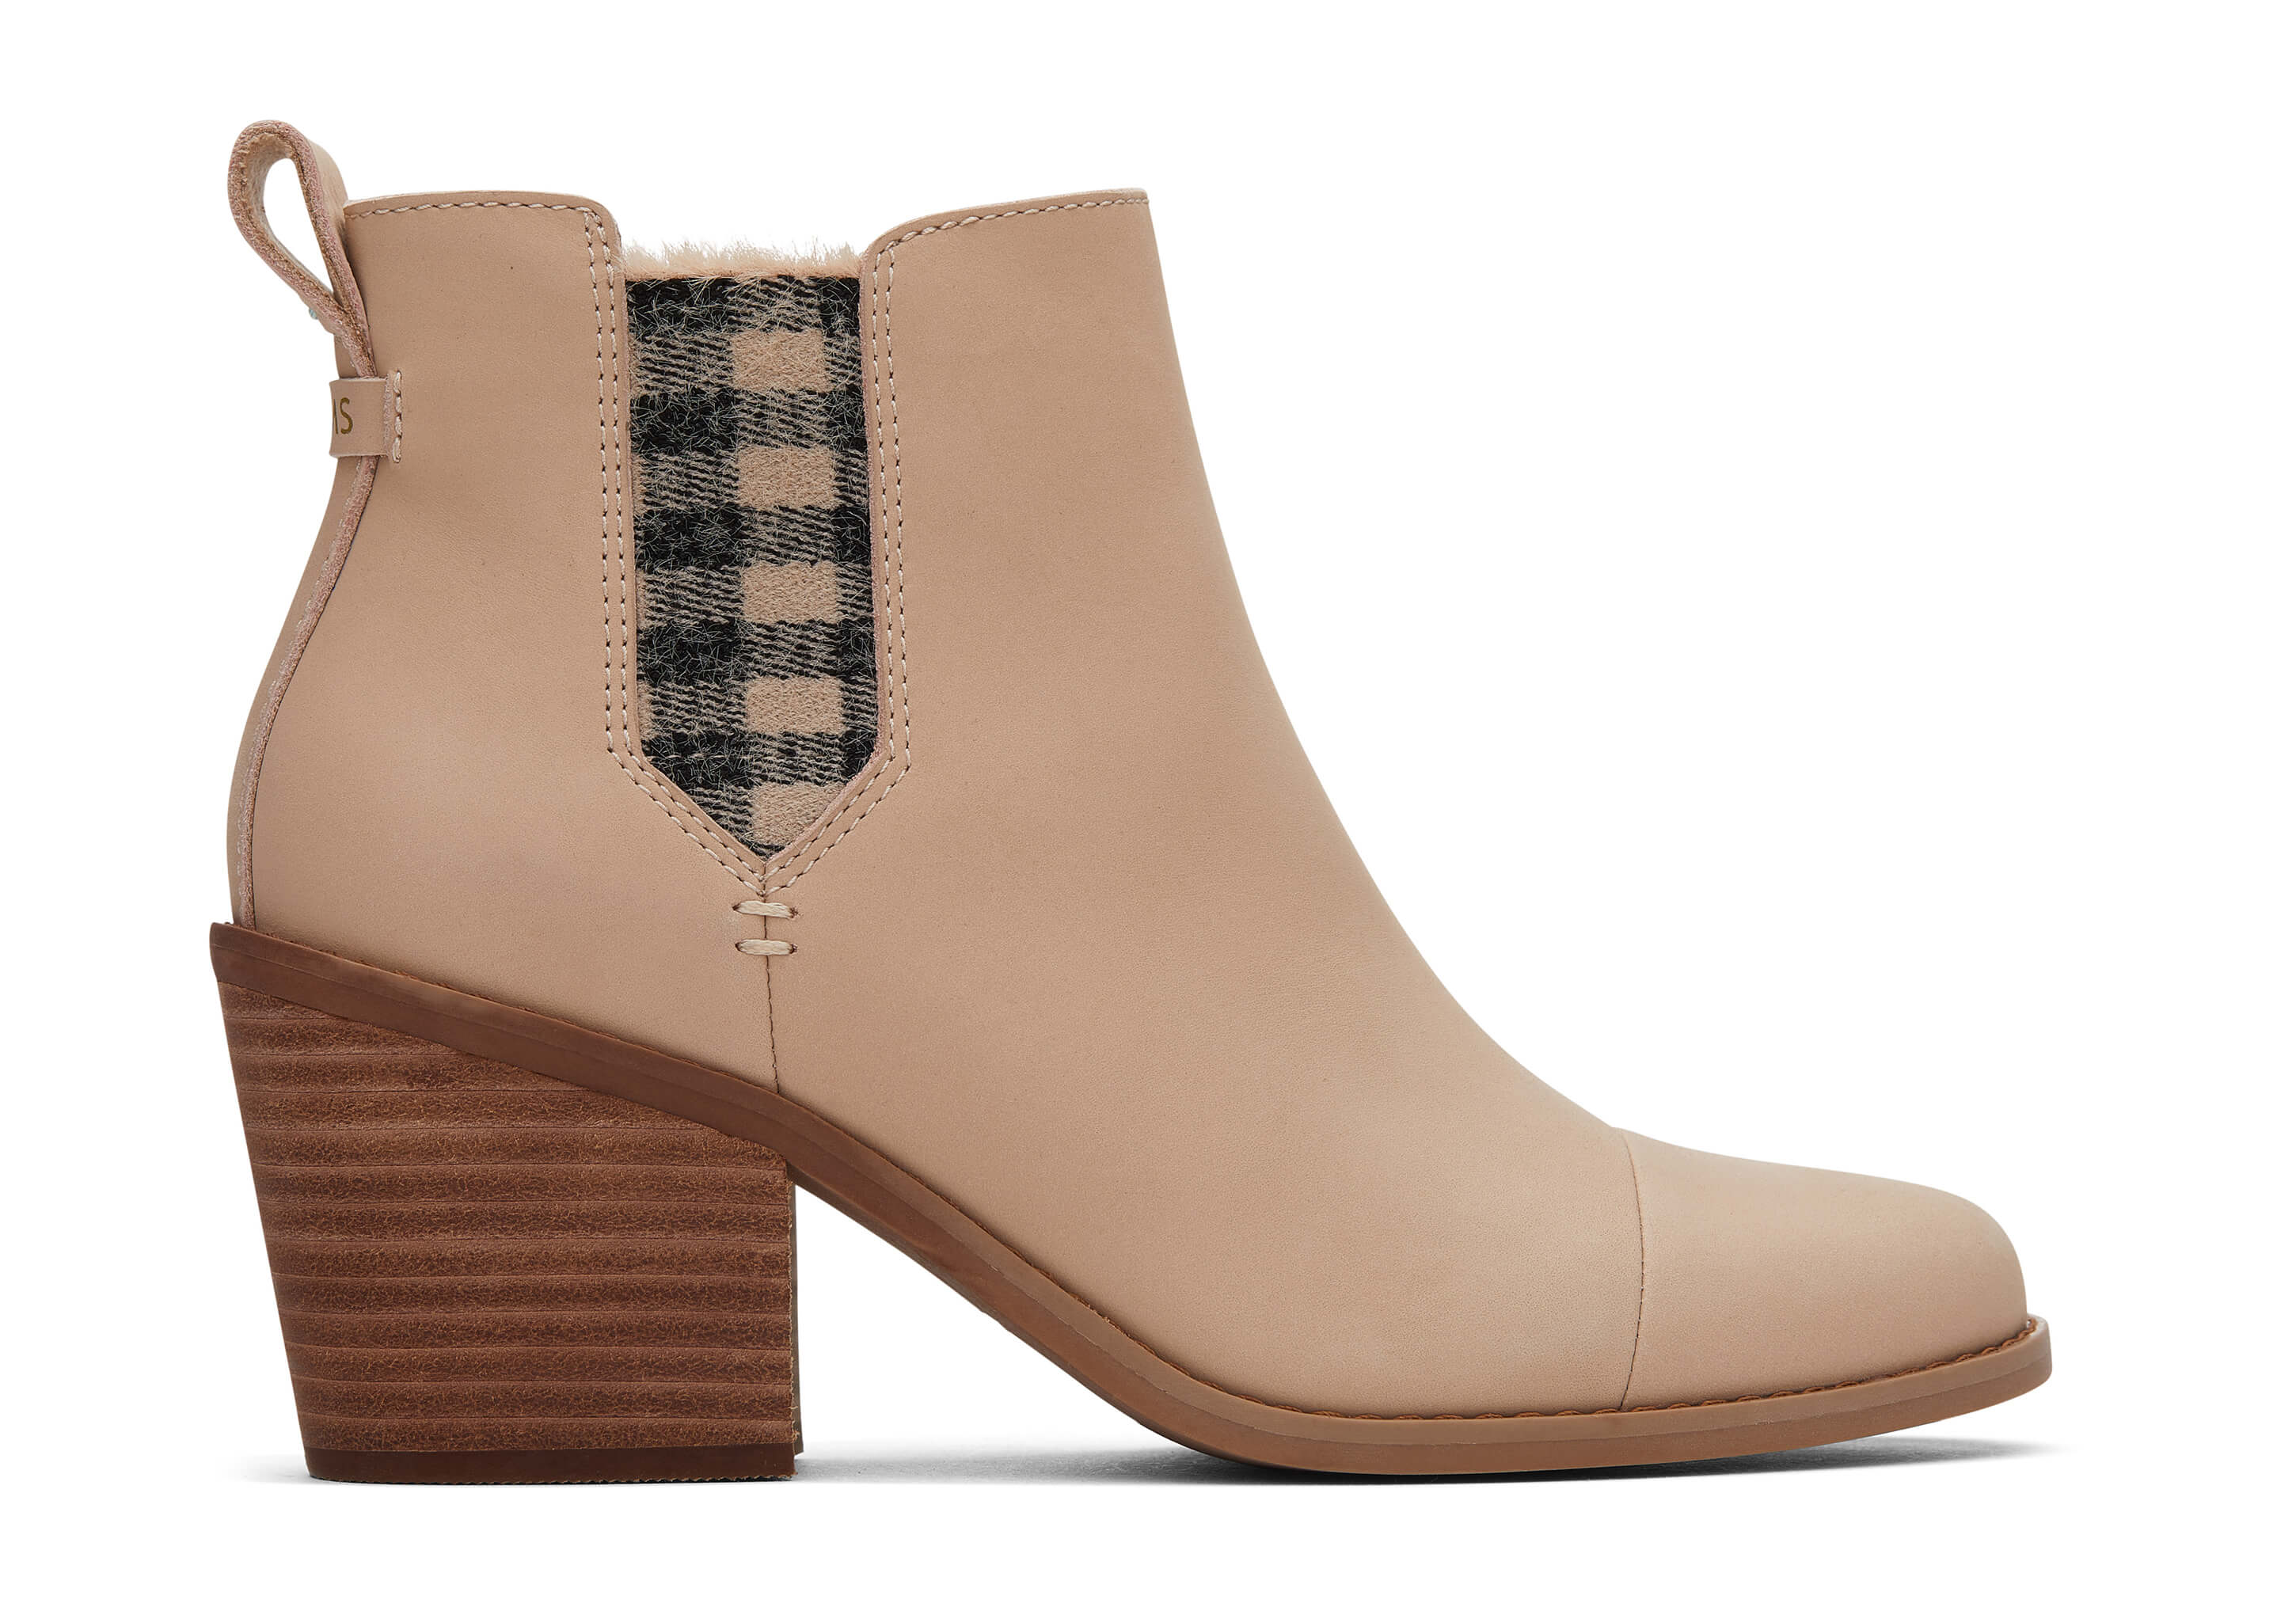 Dreamsafe store high heel boot 3 inch heel boot black boot long boot for  women styles